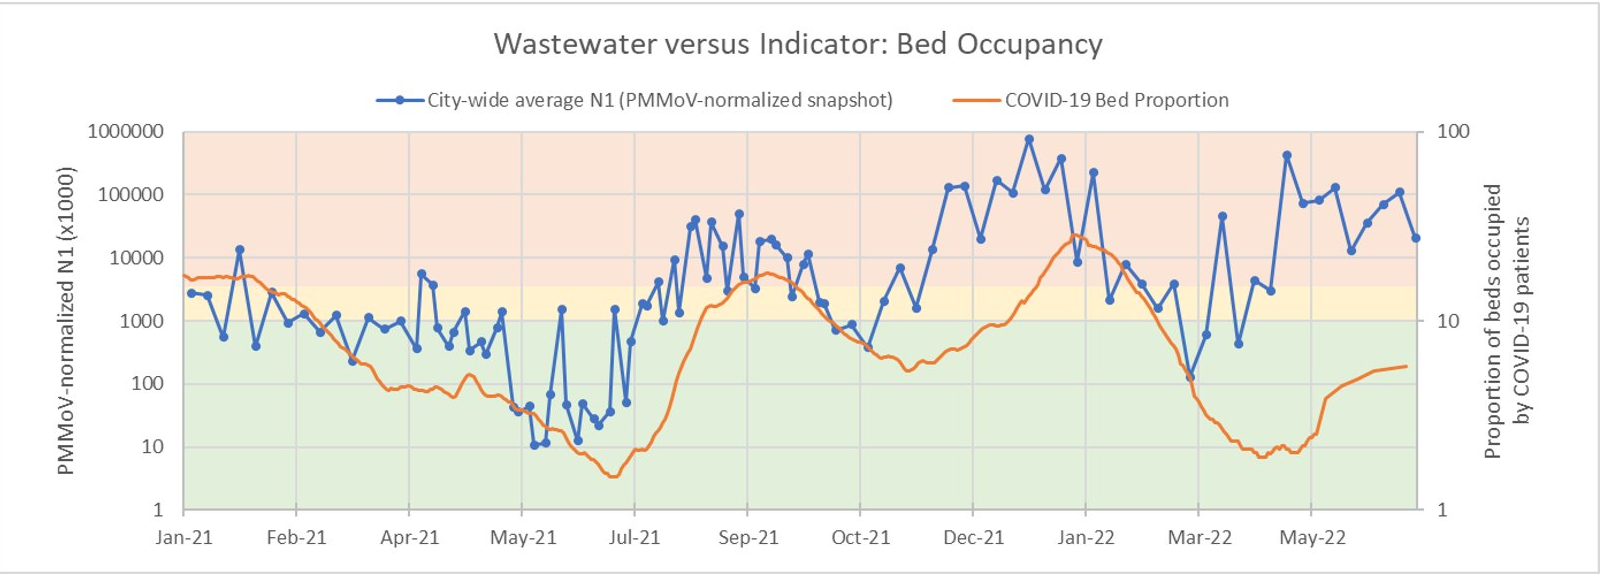 Wastewater versus Indicator: Bed Occupancy